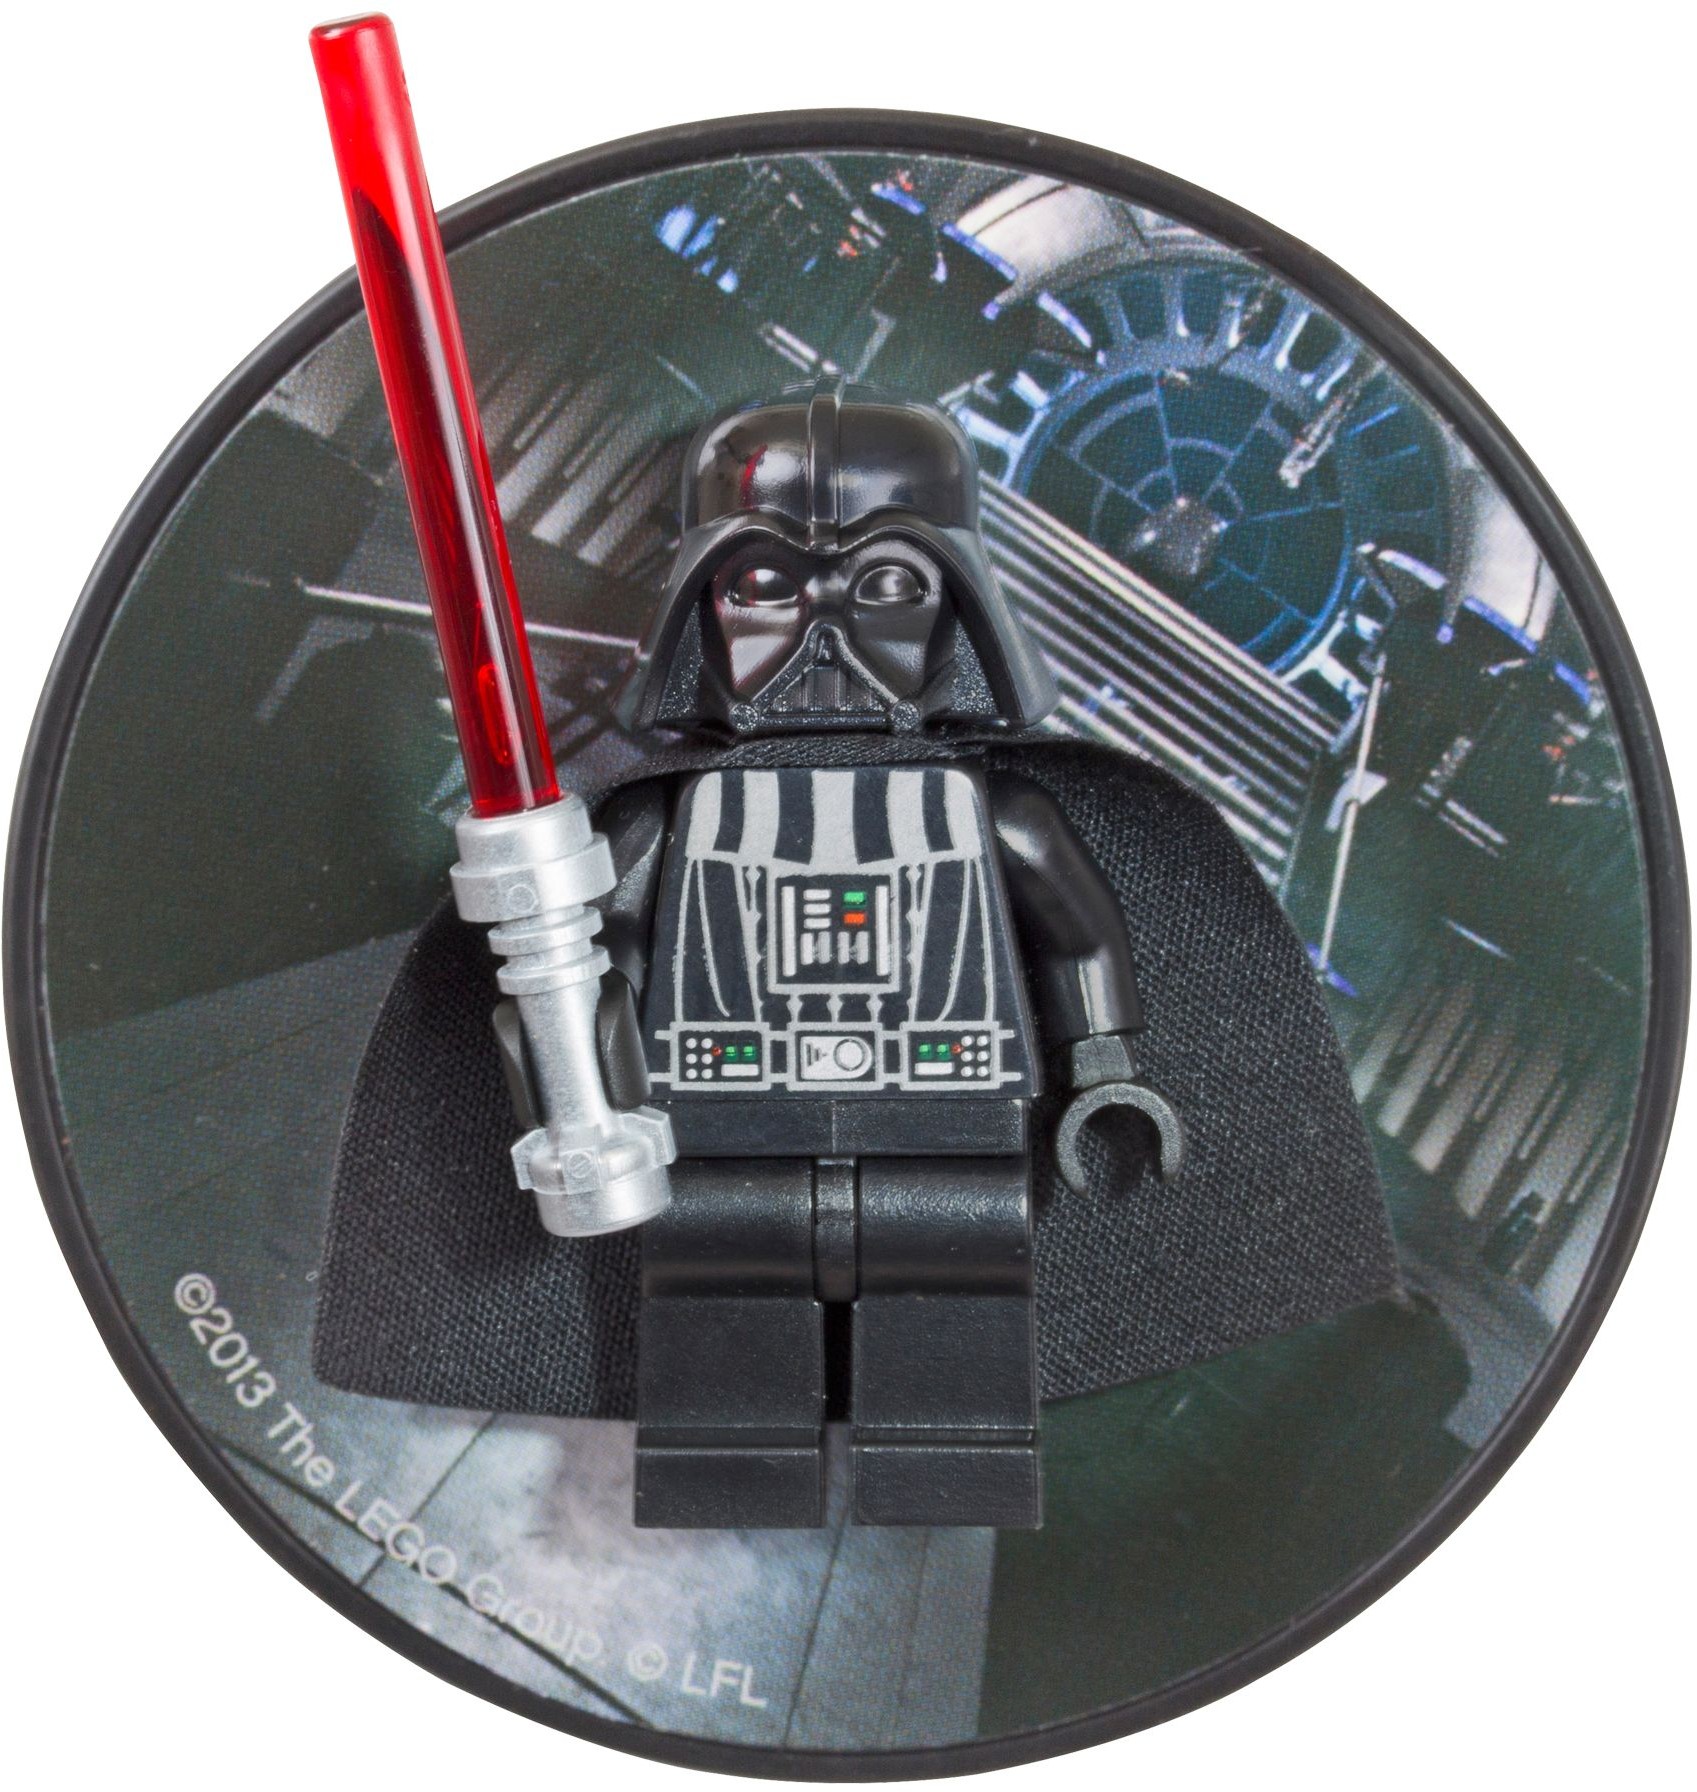 Star Wars Washington Nationals 2 Magnet Set w/ Yoda & Darth Vader New1 Sealed! 